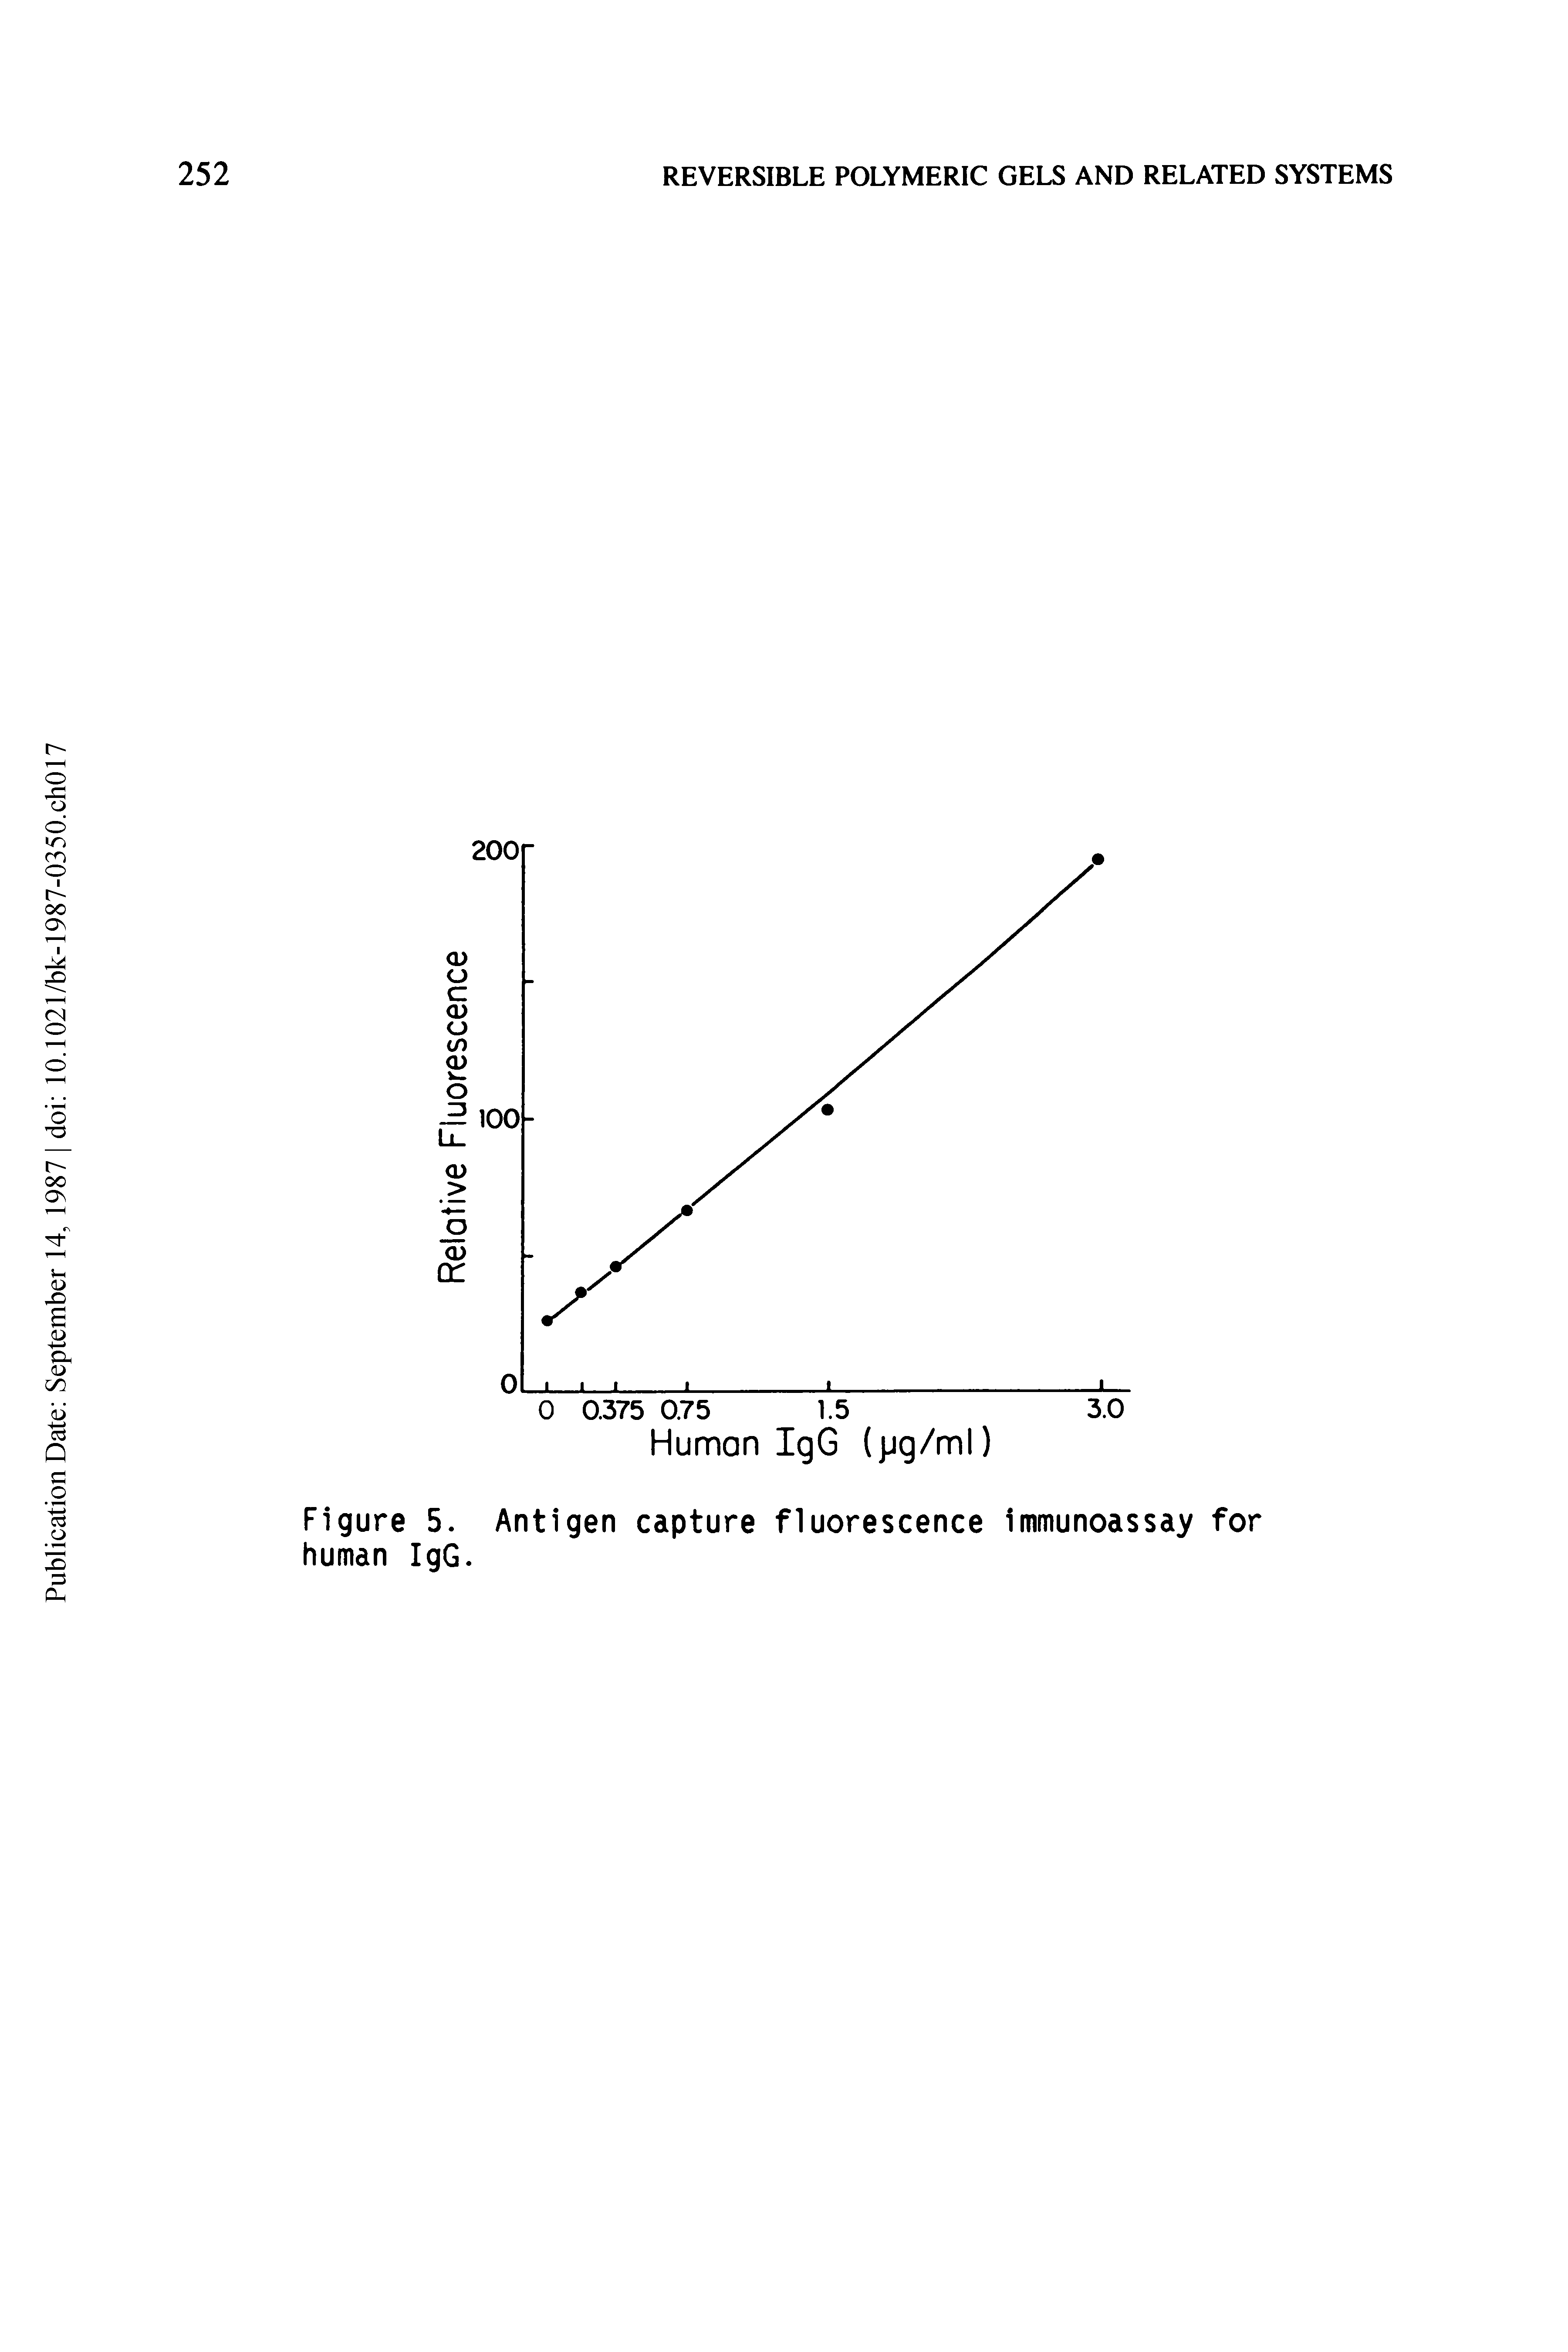 Figure 5. Antigen capture fluorescence Immunoassay for human IgG.